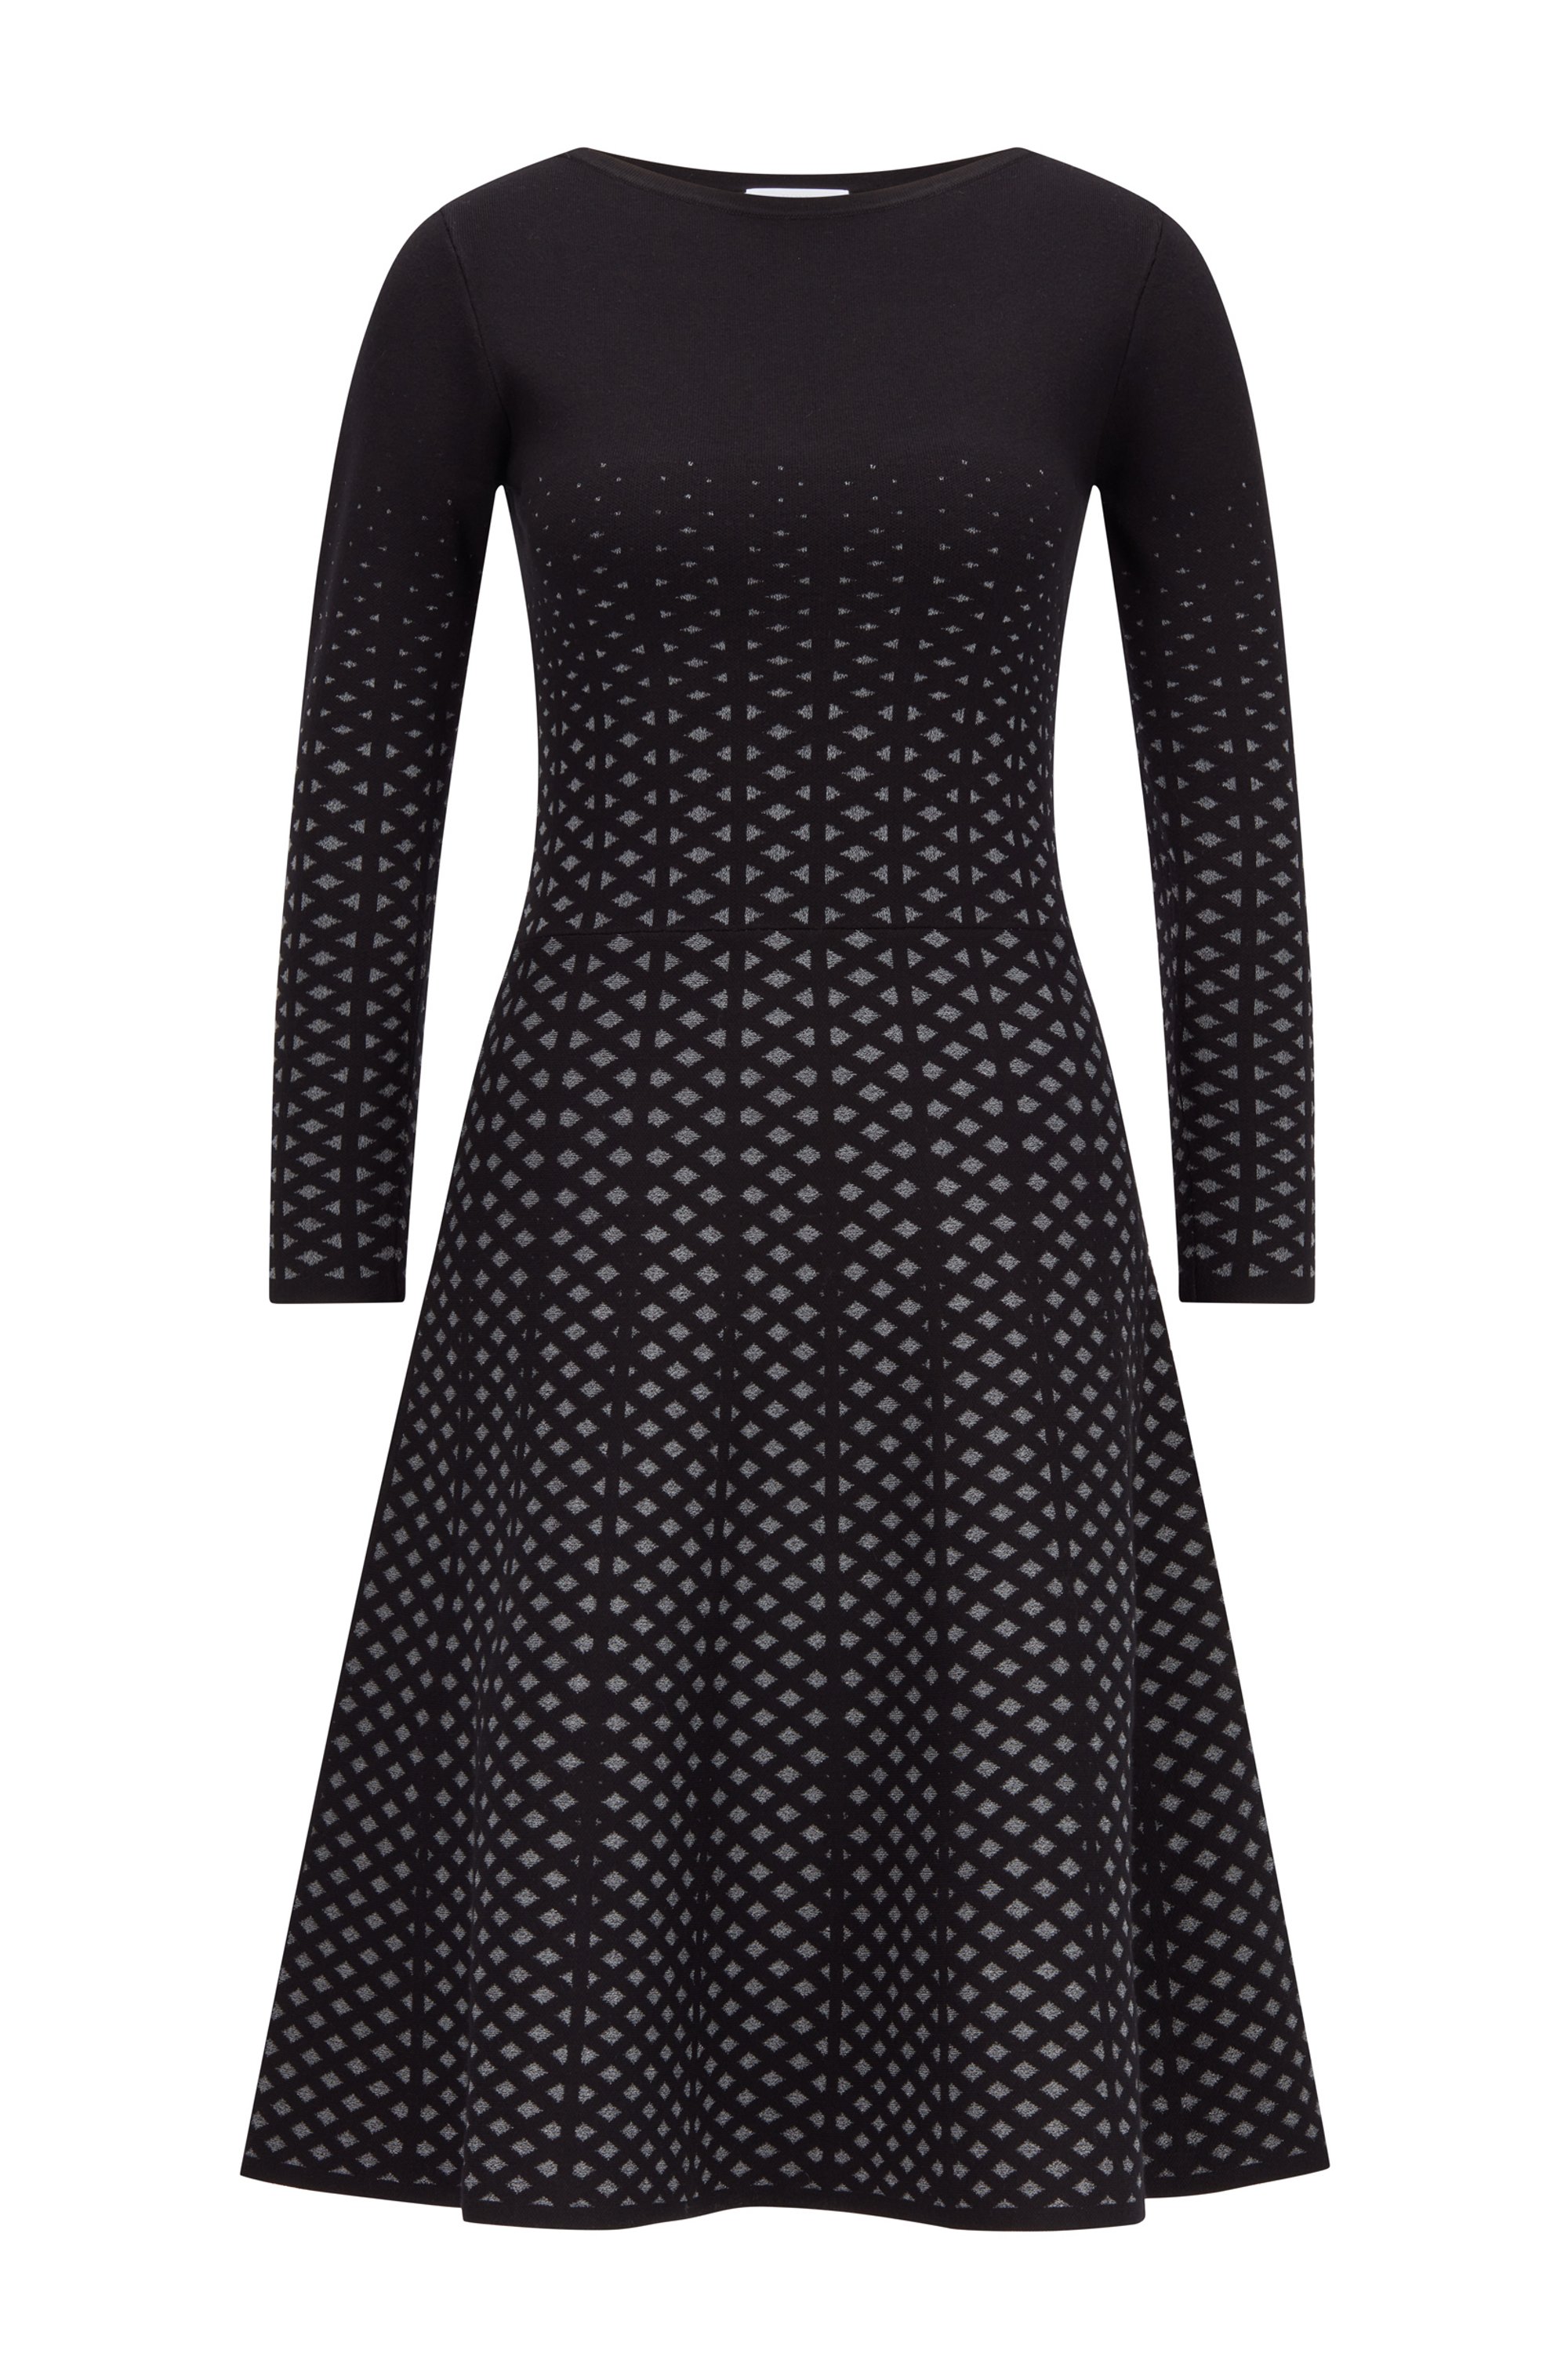 Long-sleeved dress in degradé knitted jacquard, Patterned